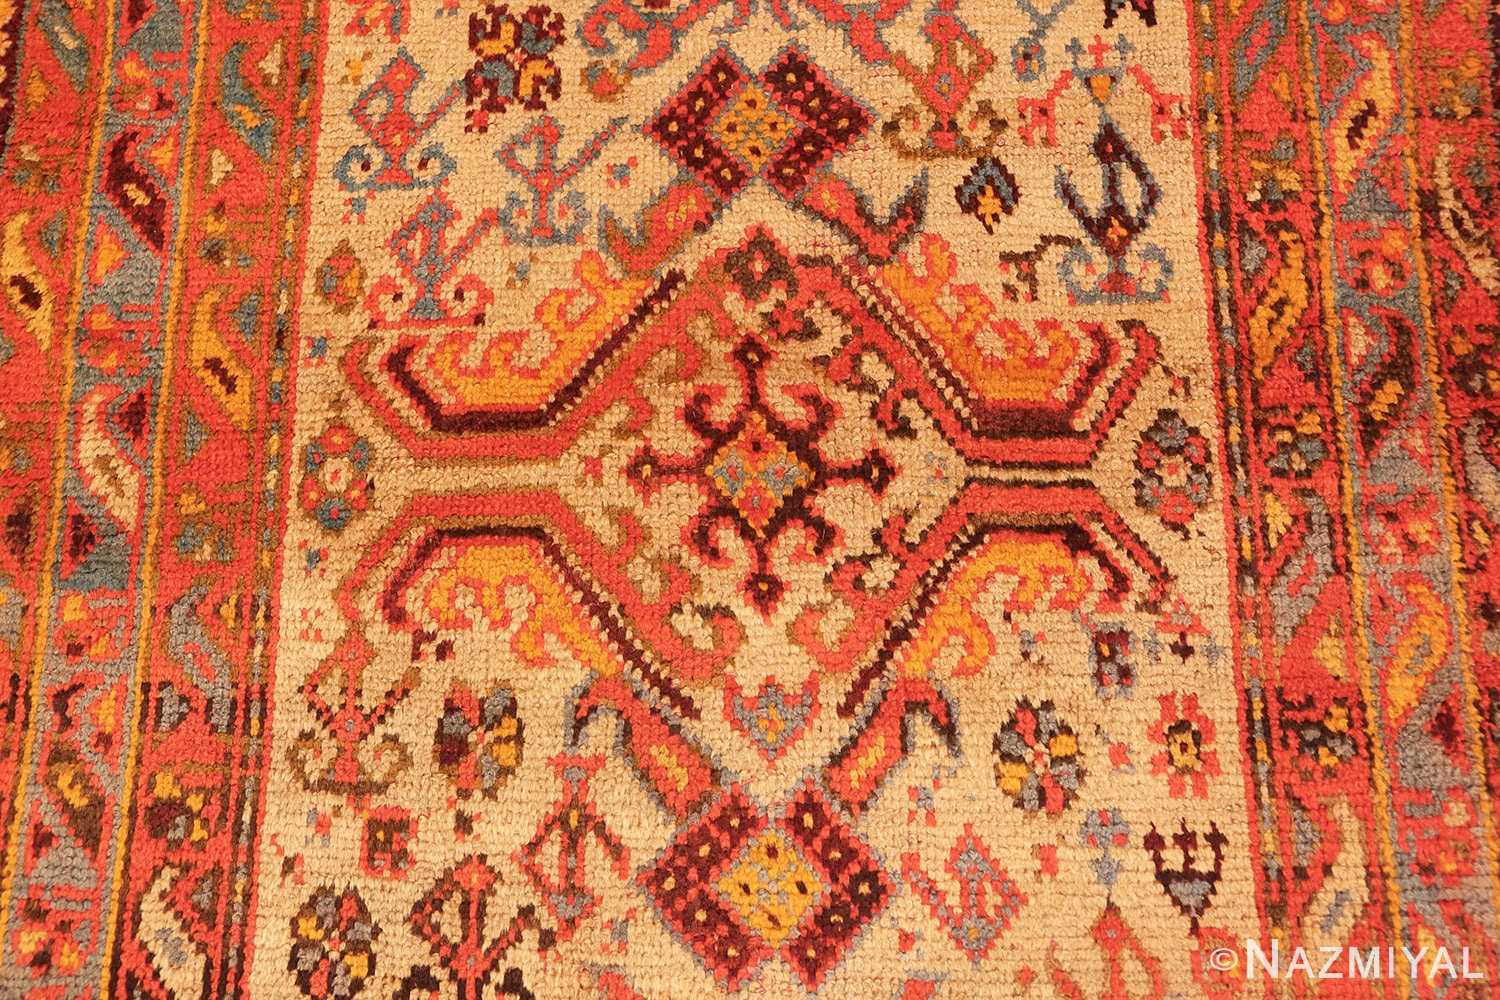 Background Antique Oushak Turkish runner rug 49364 by Nazmiyal